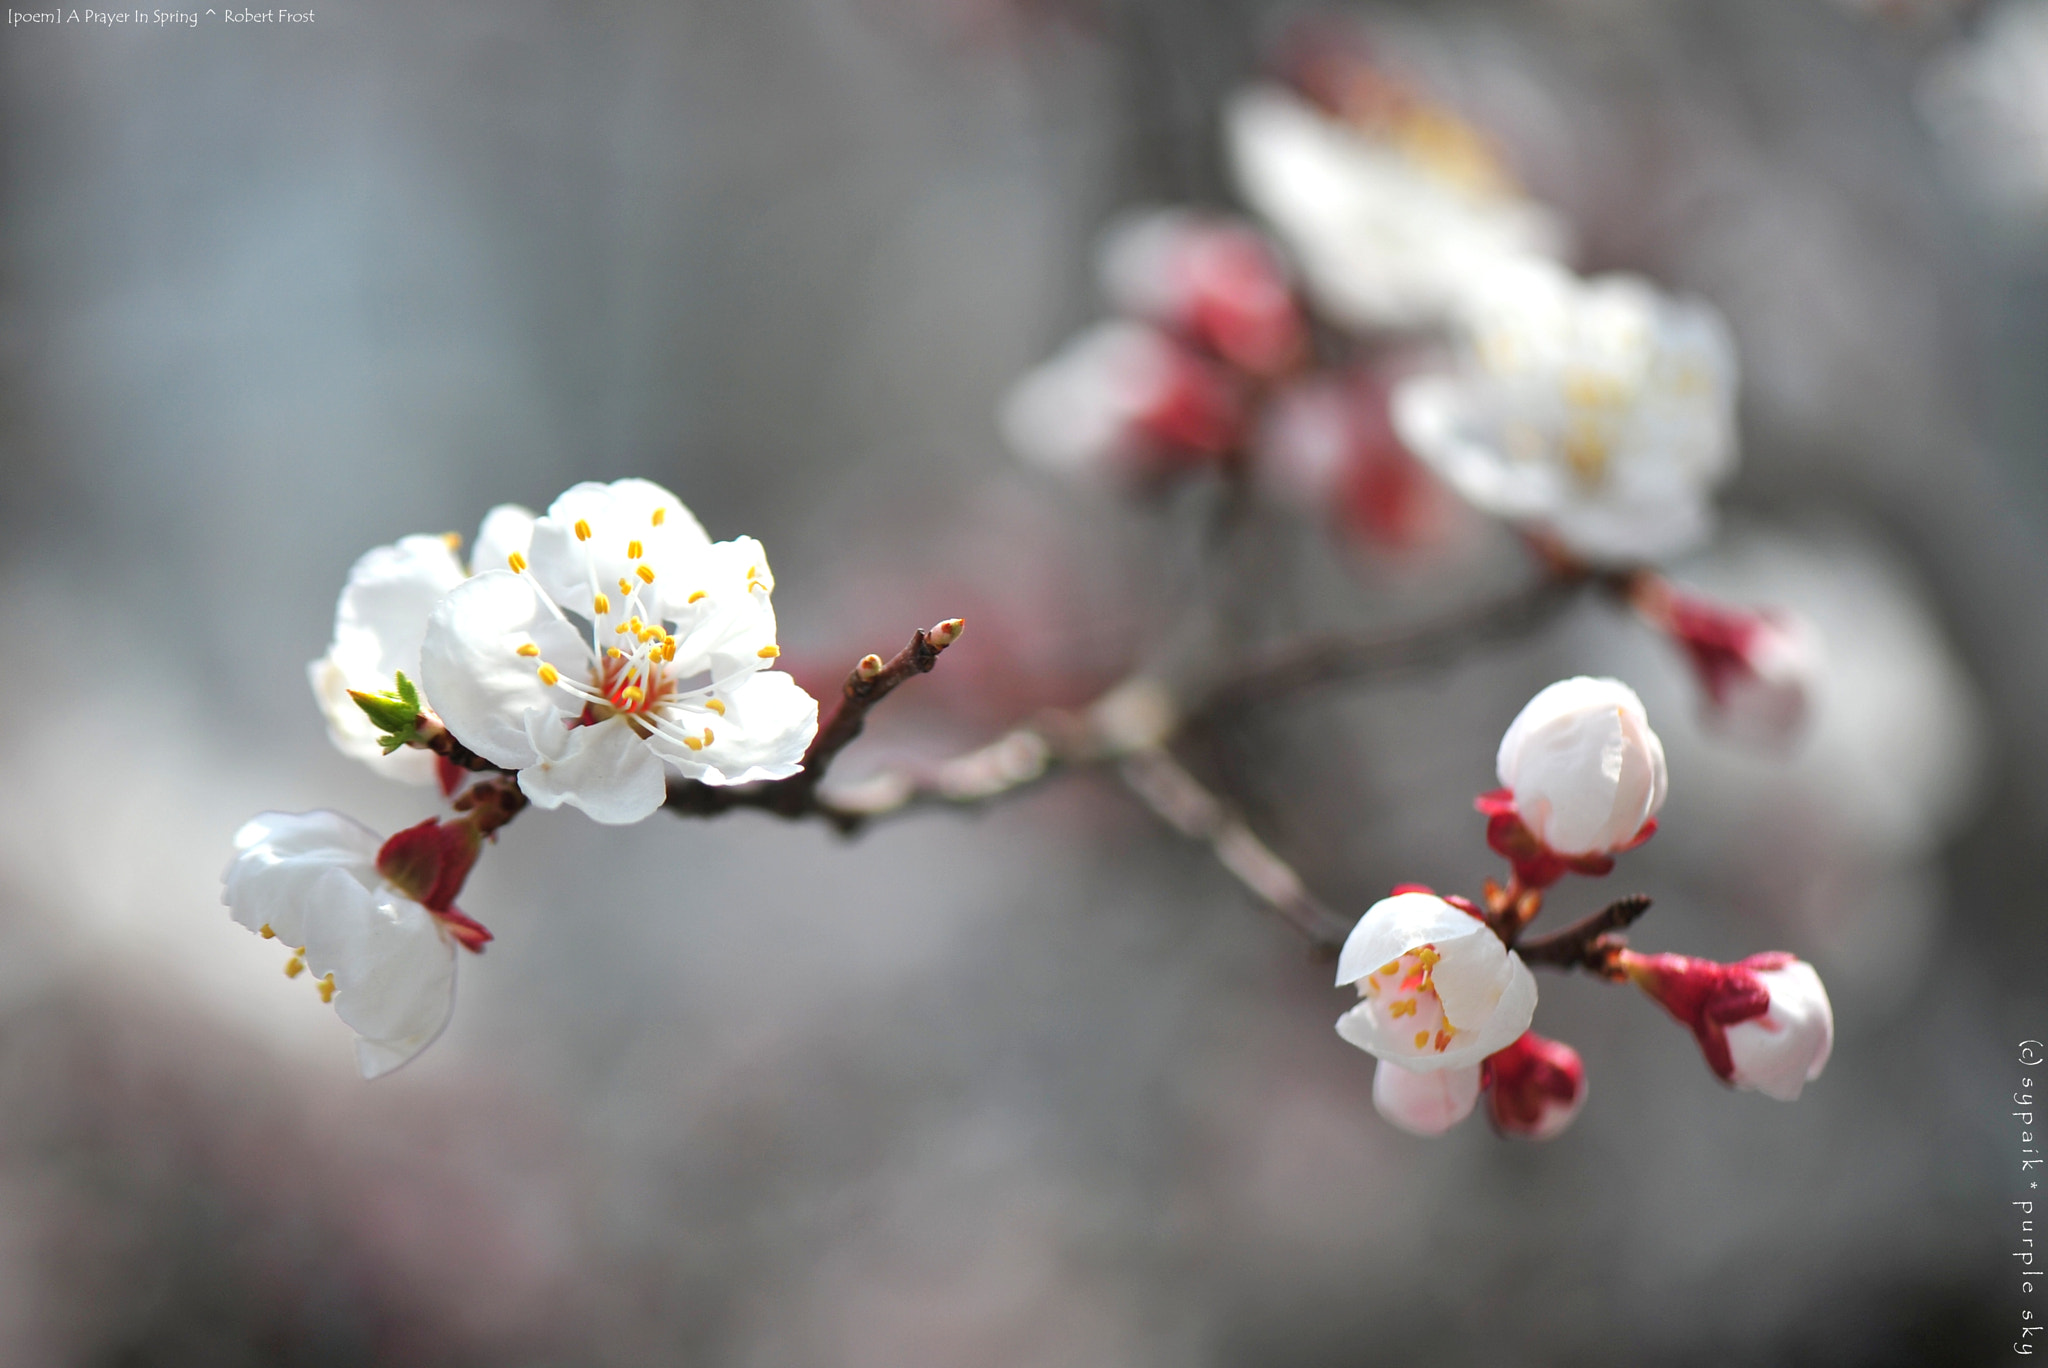 Nikon D700 sample photo. A prayer in spring * photography